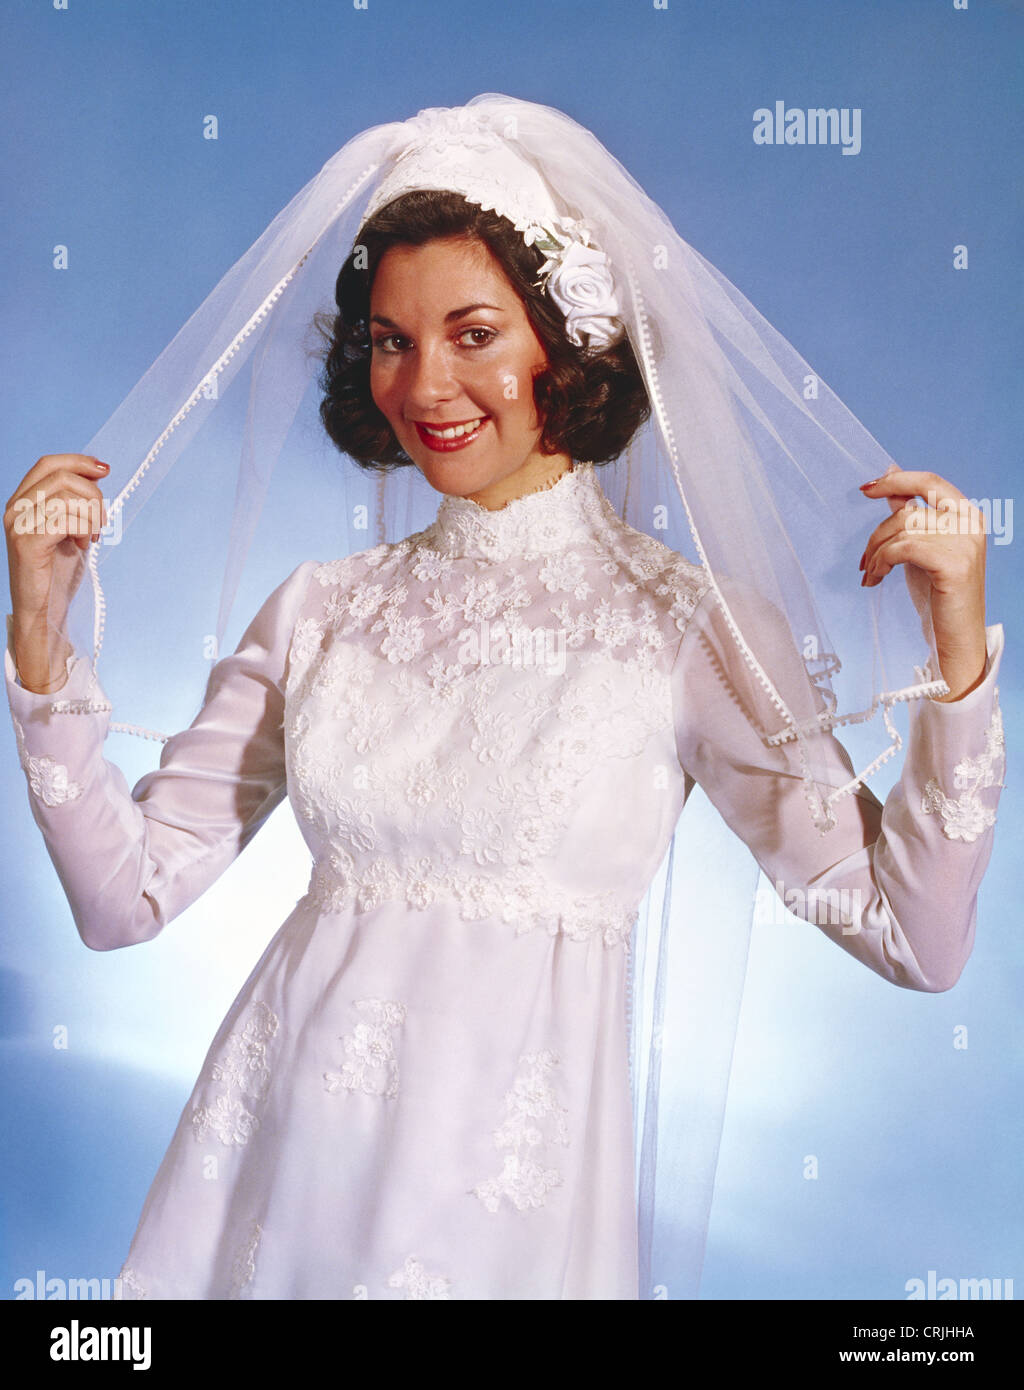 https://c8.alamy.com/comp/CRJHHA/vintage-portrait-of-a-bride-showing-her-veil-CRJHHA.jpg